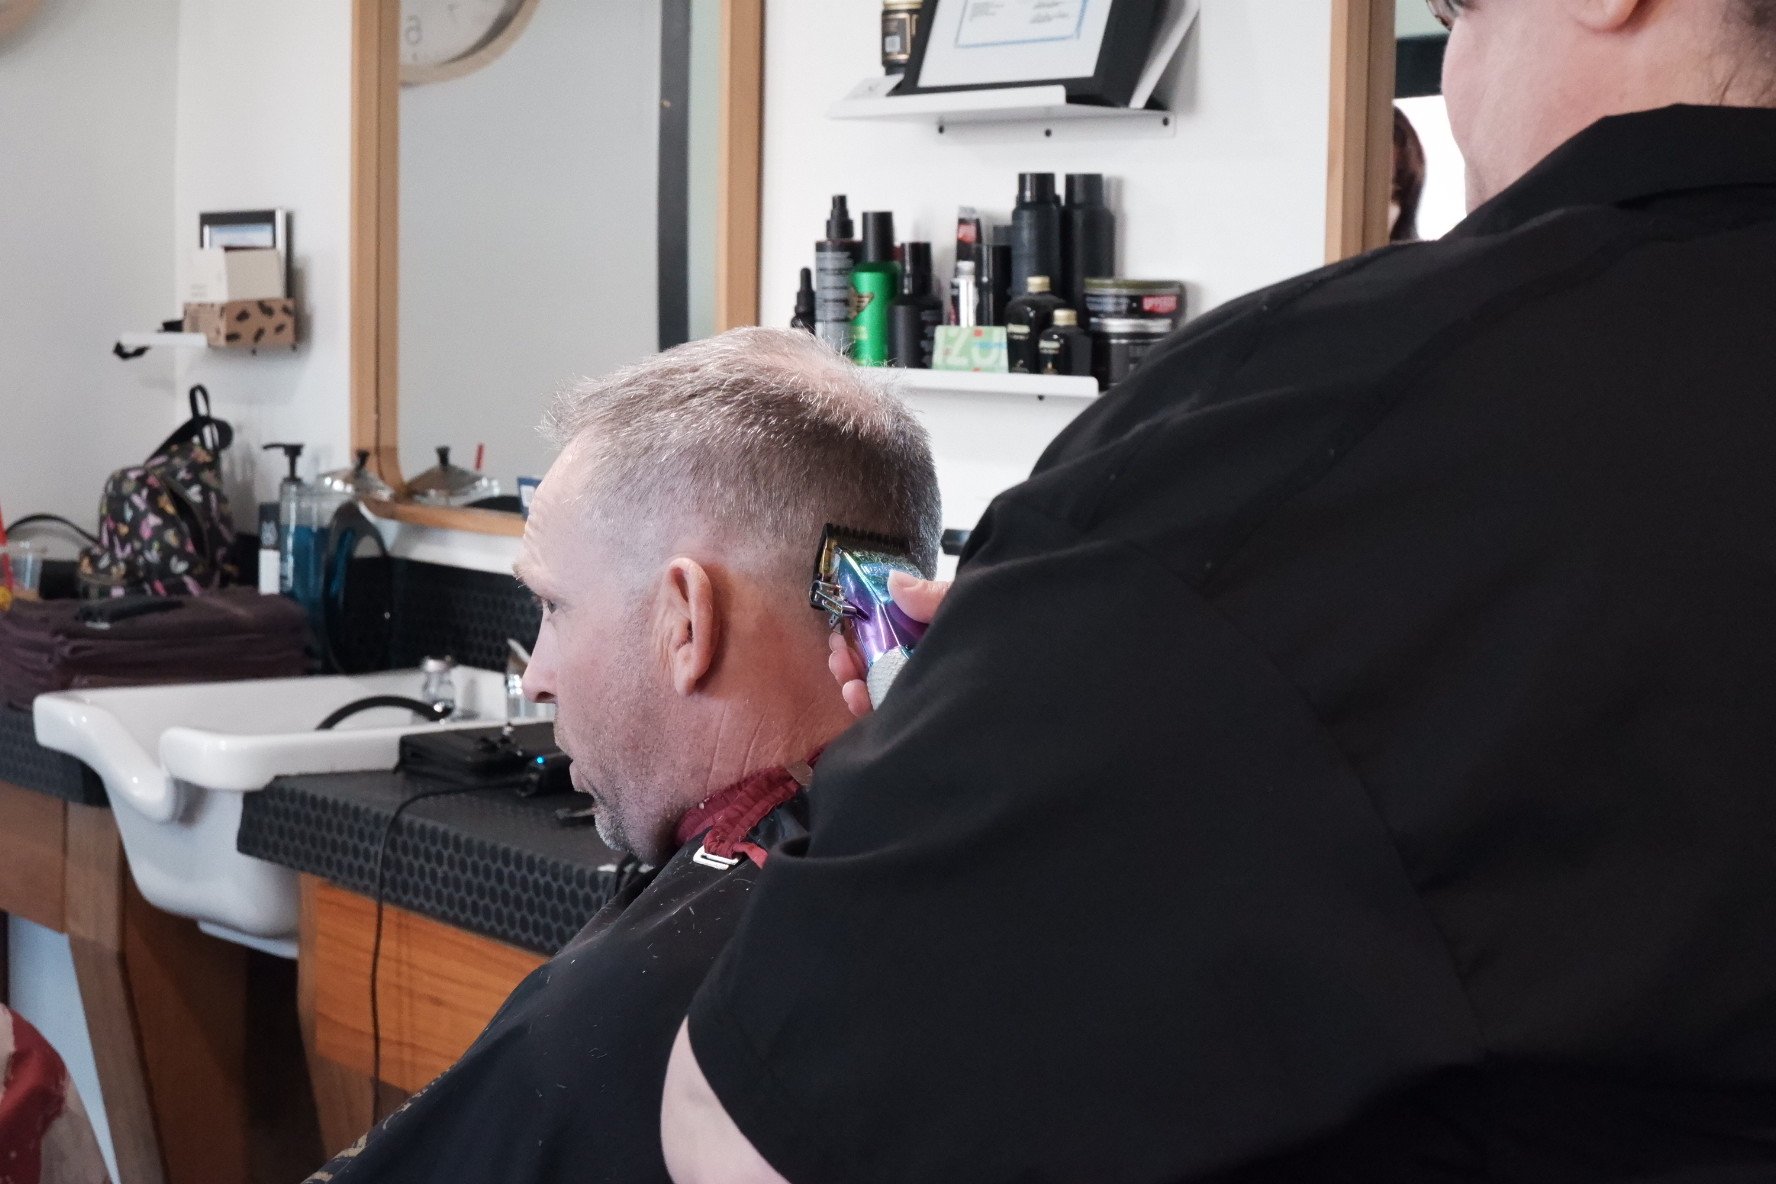 Another week, another opportunity to get those hairs cut. 

 #kansascity #kansascitymo #kansascitymissouri #barbershopconnect #BarberShopVibes #barbershopnearme